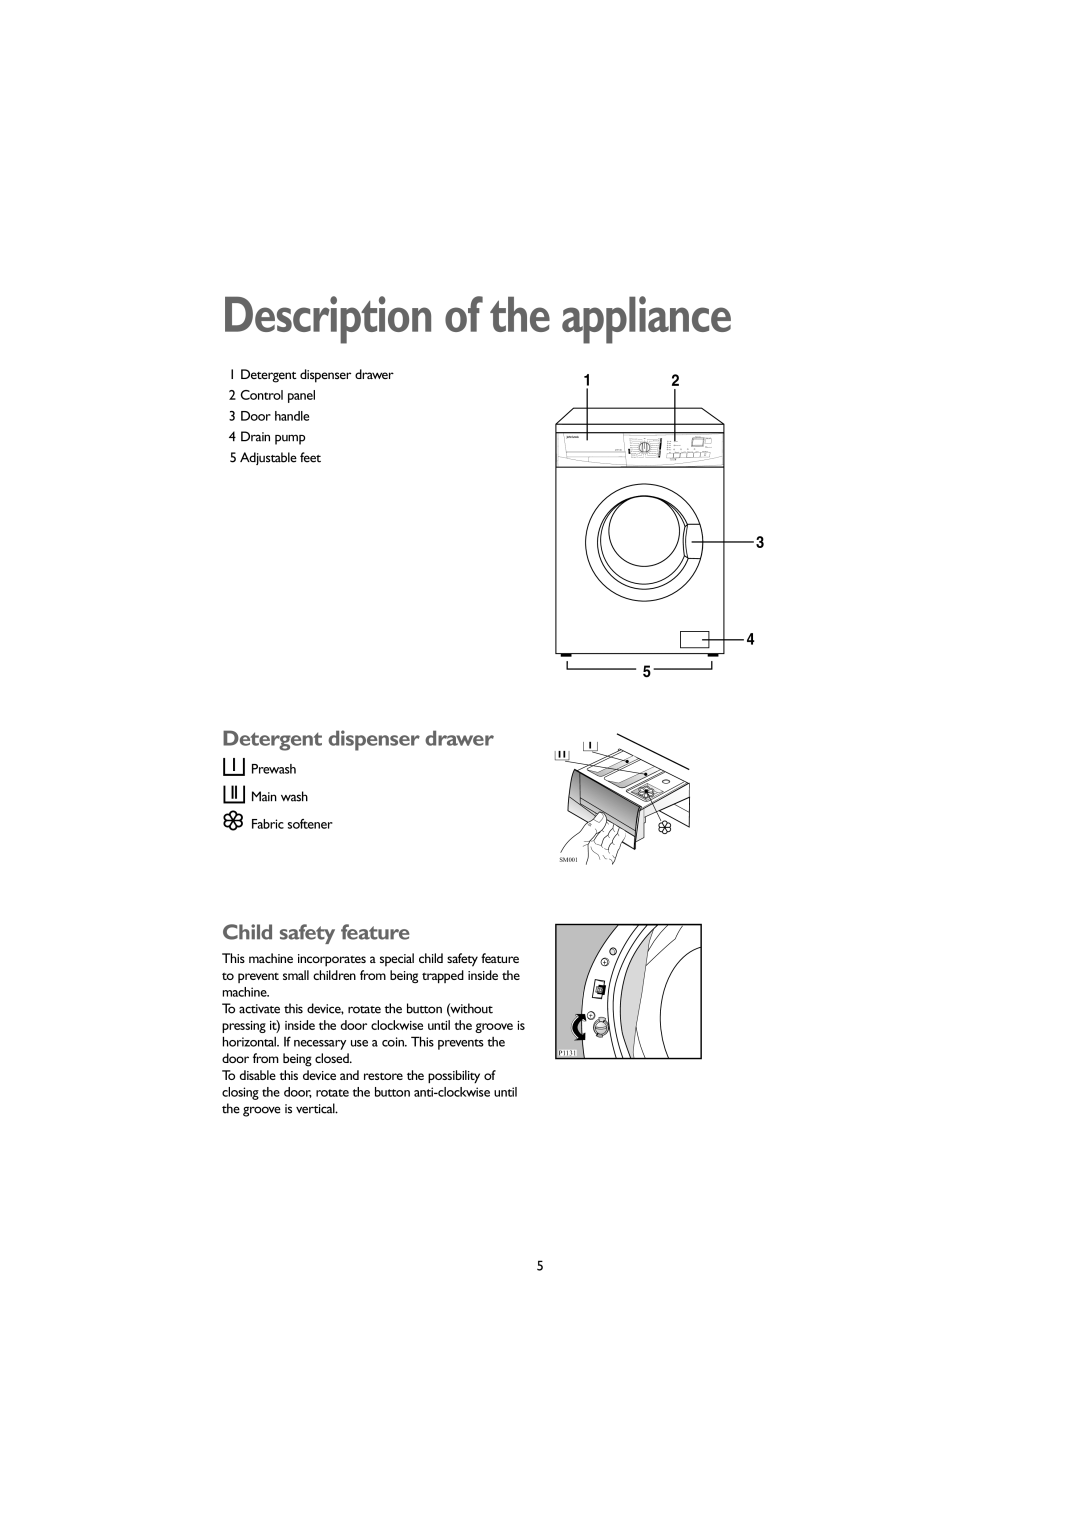 John Lewis JLWM 1203 instruction manual Description of the appliance, Detergent dispenser drawer, Child safety feature 